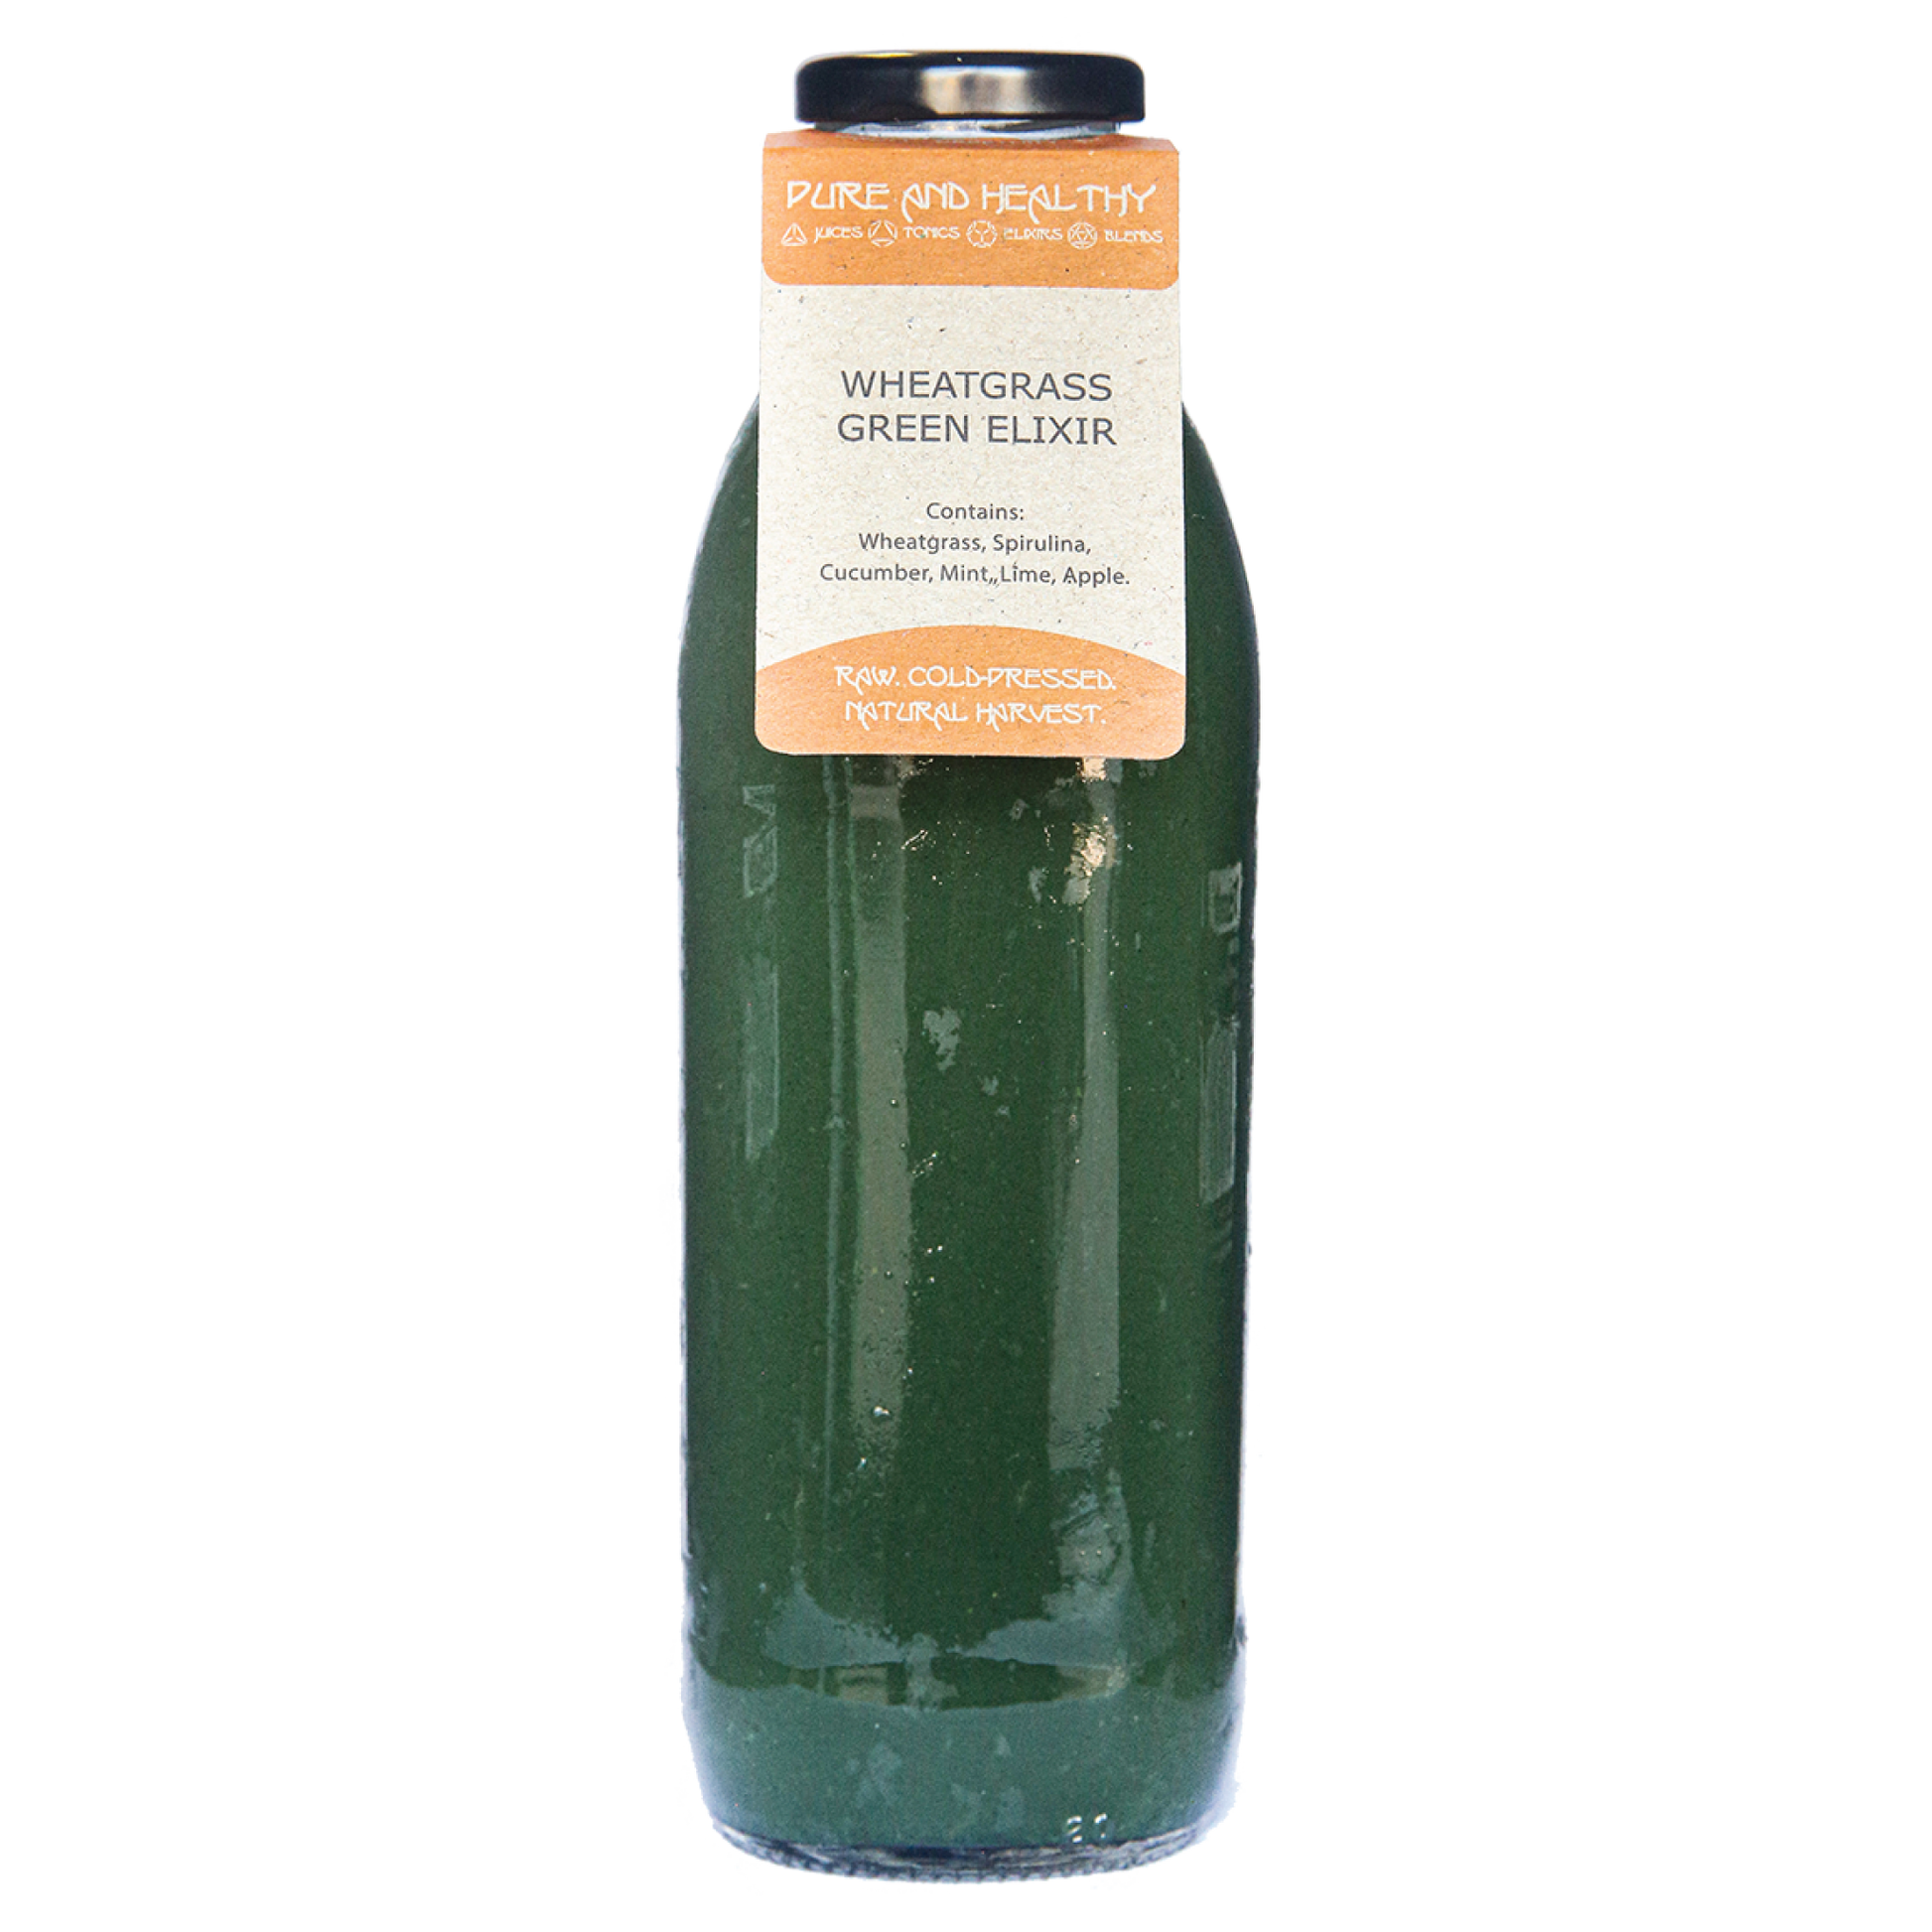 Wheatgrass Green Elixir